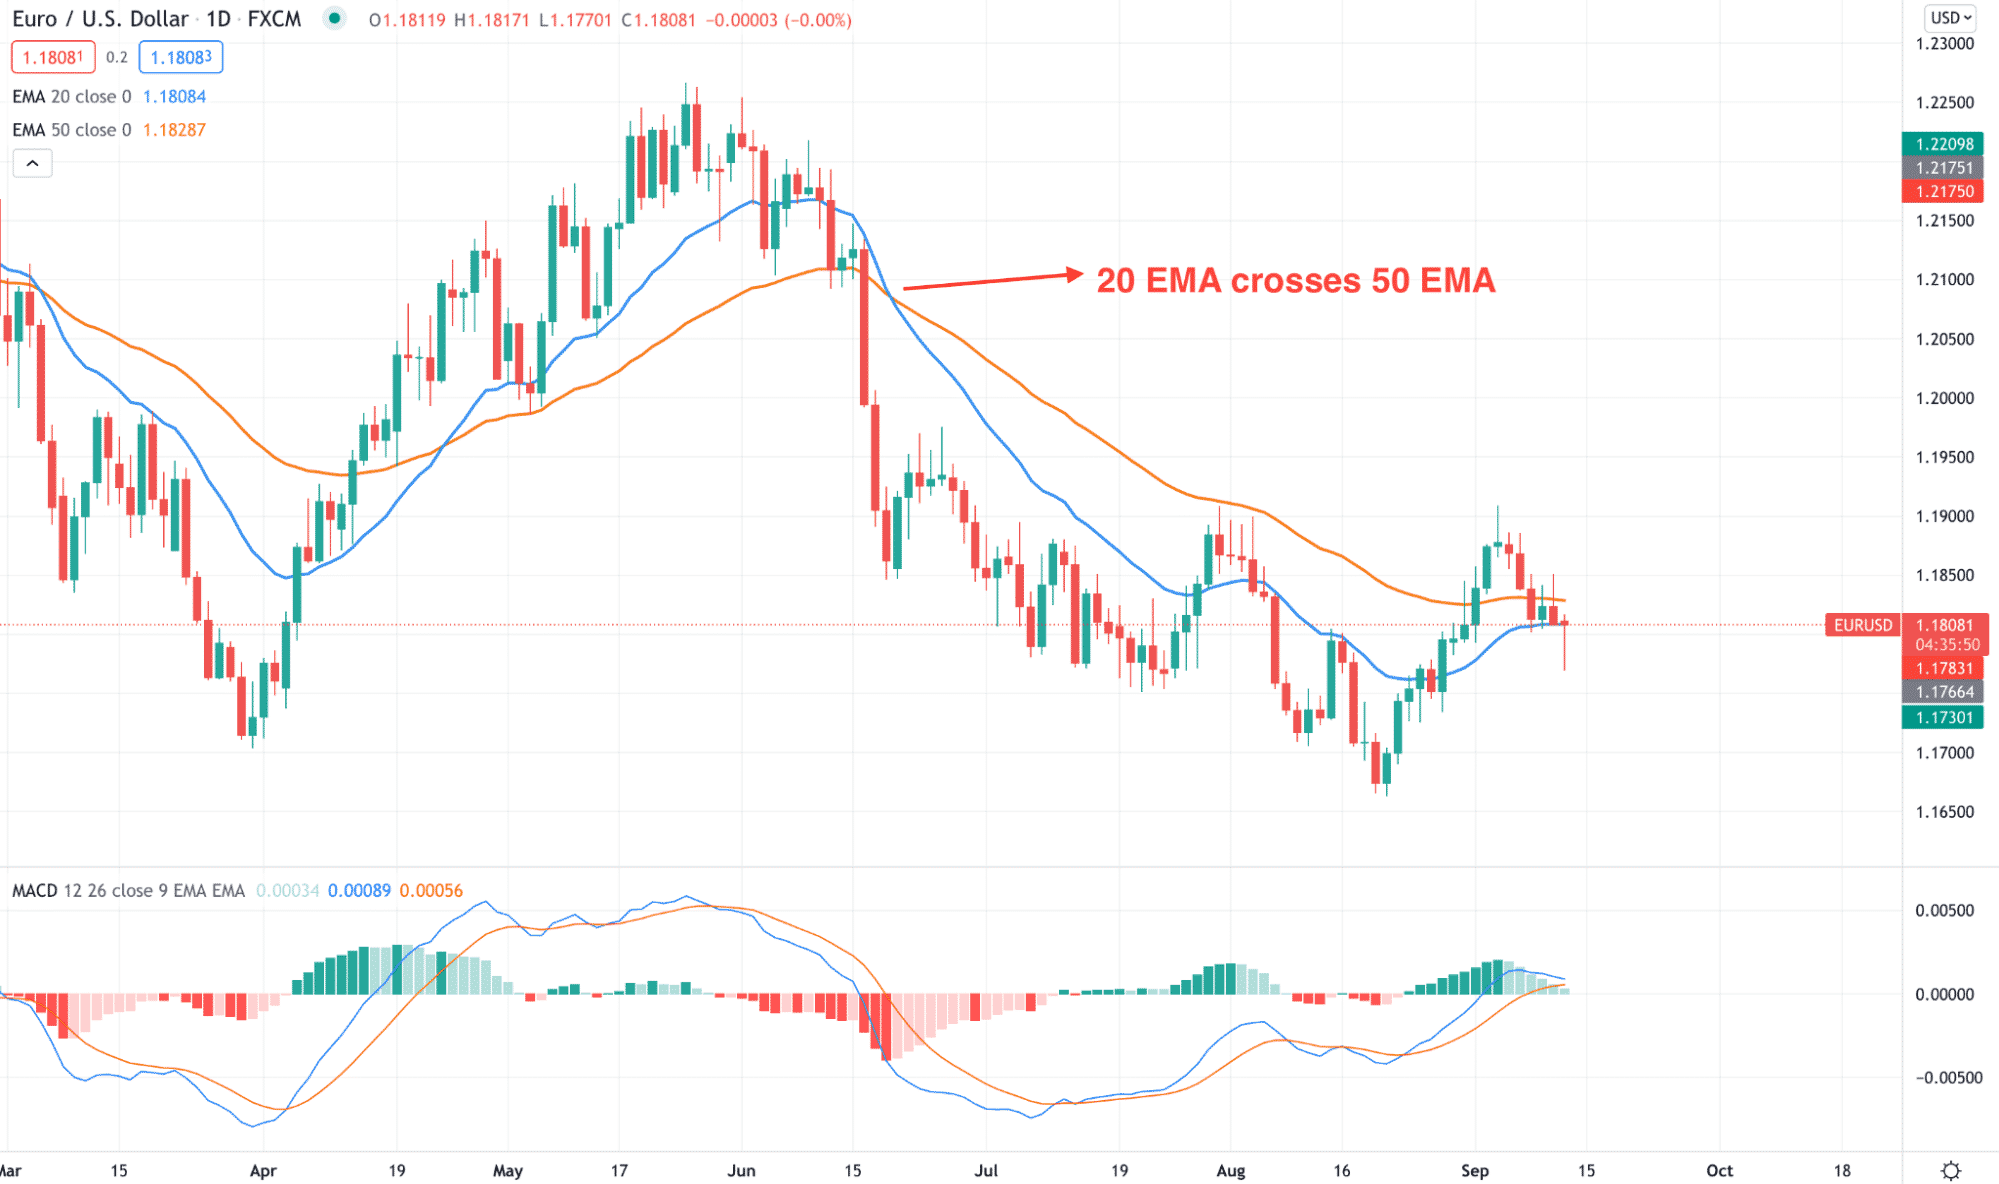 EUR/USD trend following chart